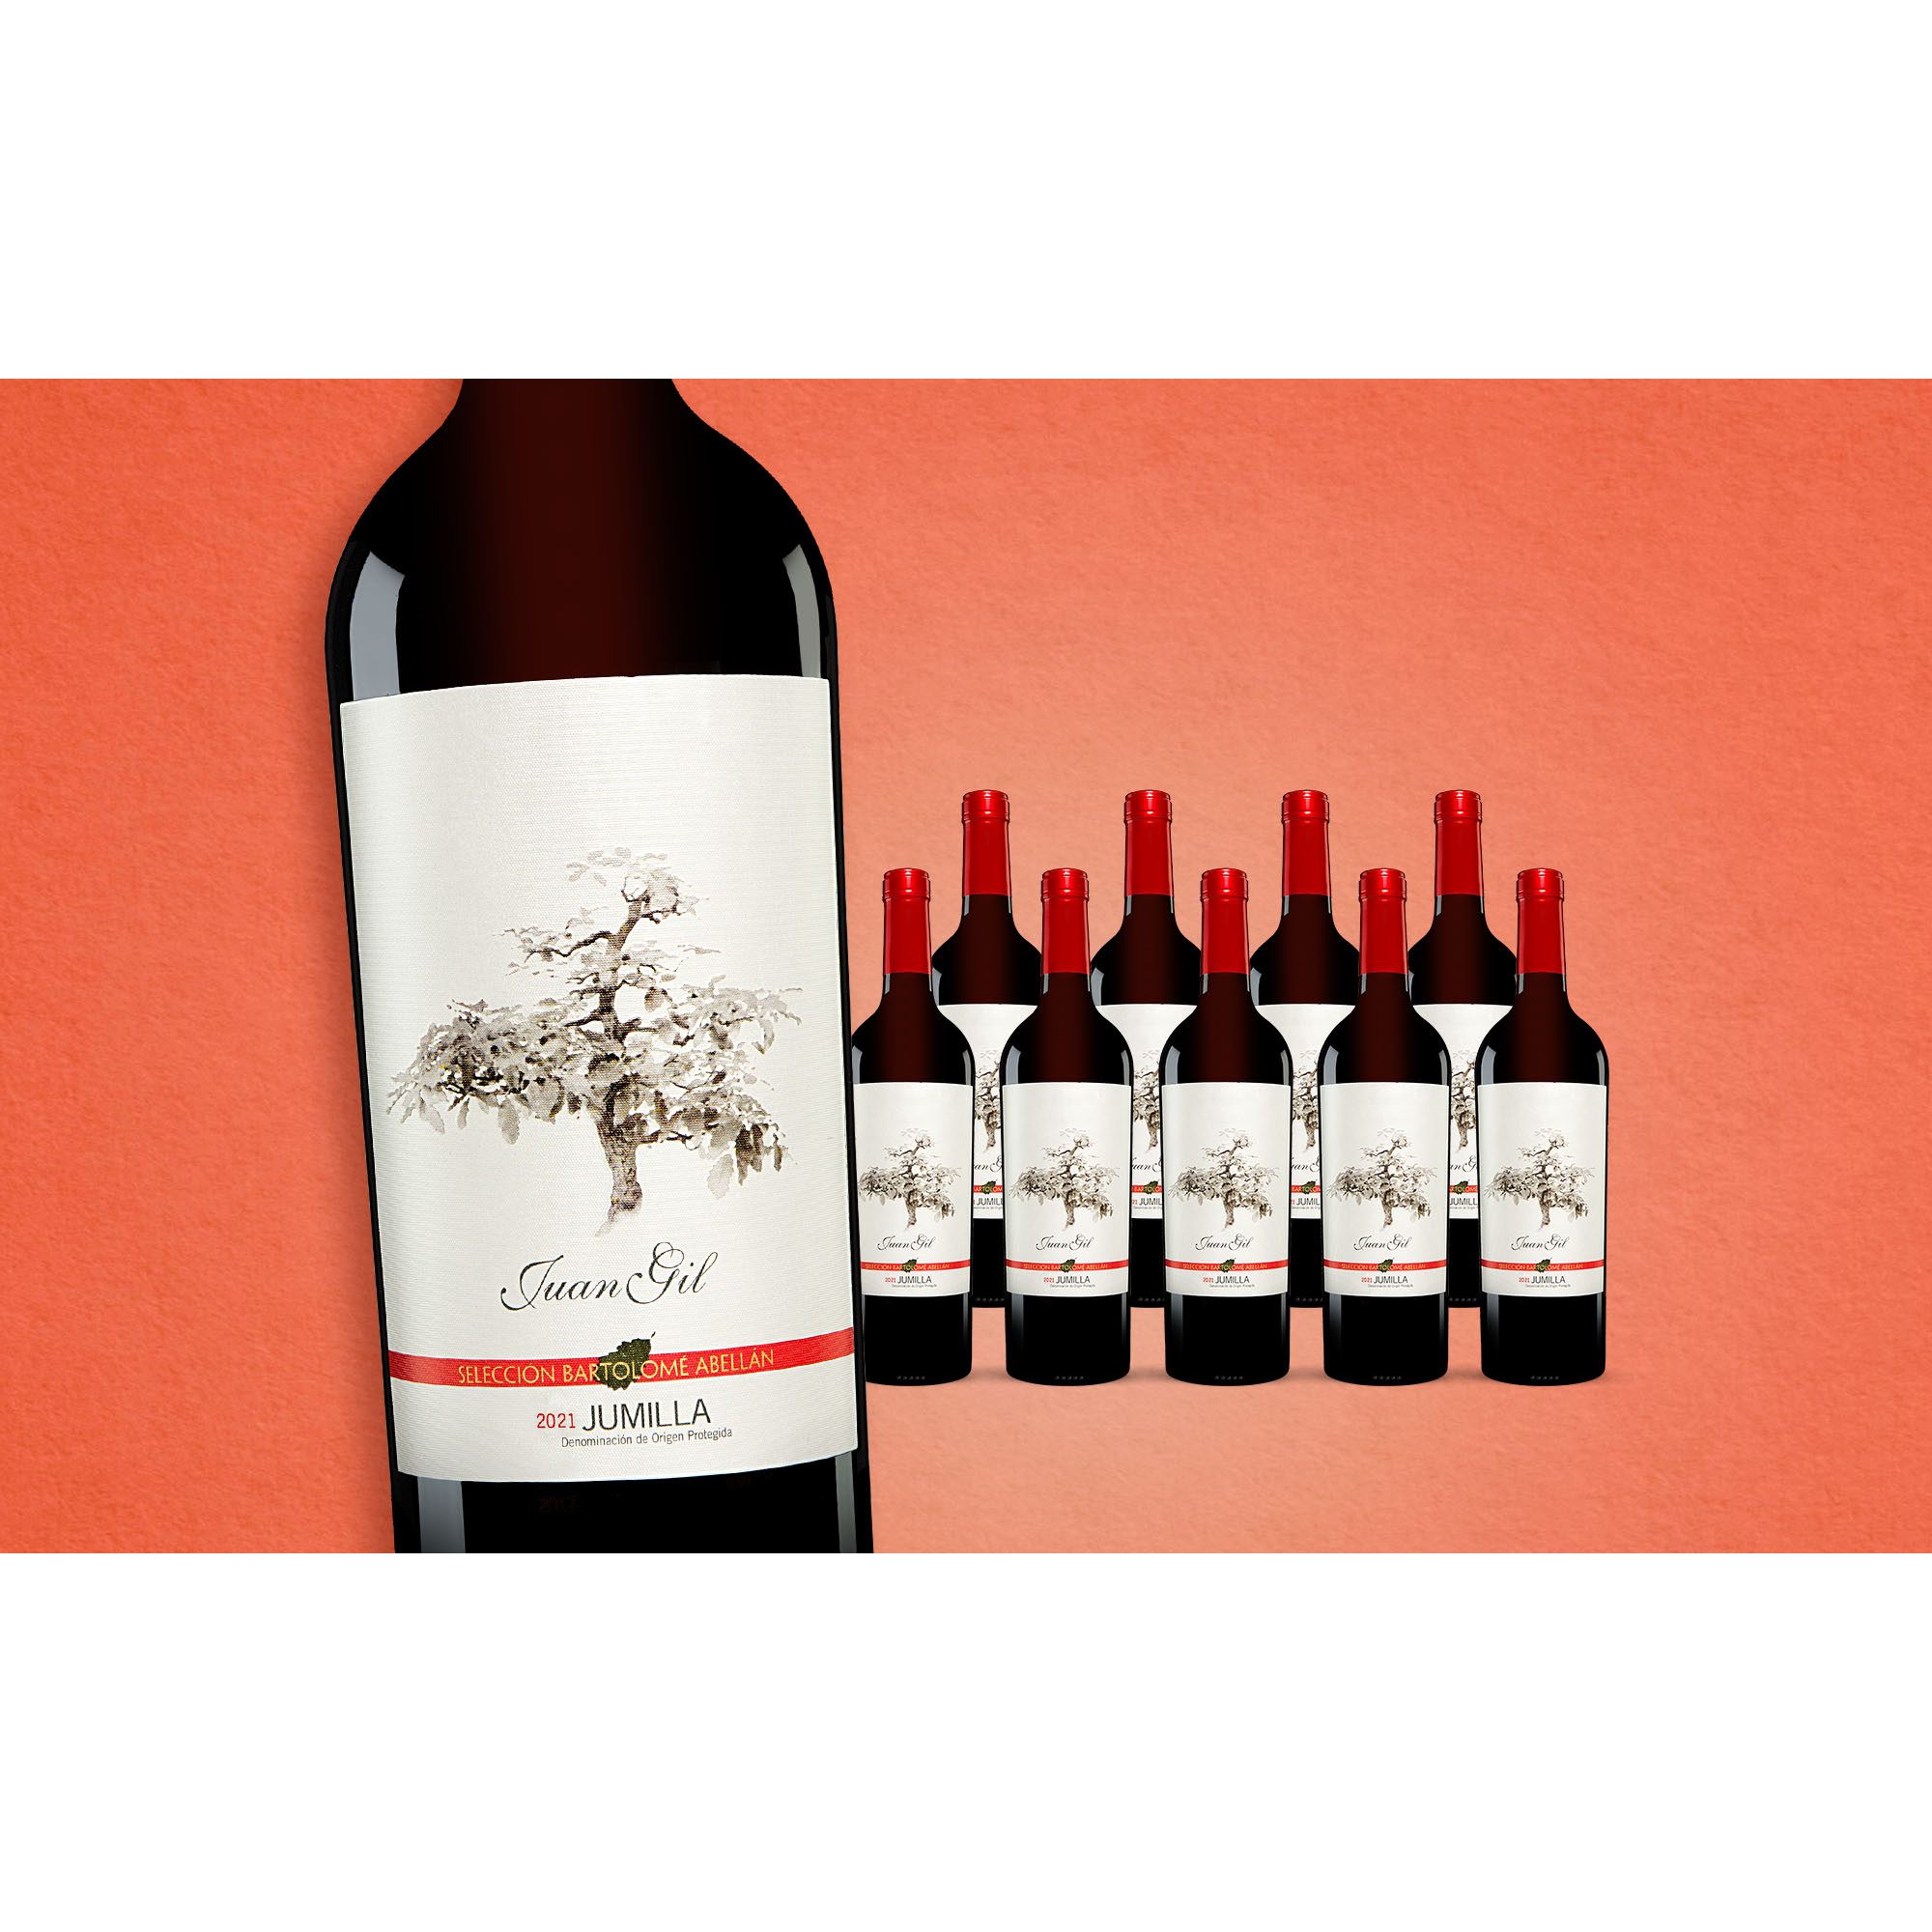 Juan Gil Selección »Bartolomé Abellán« 2021  7.5L Trocken Weinpaket aus Spanien 34458 vinos DE